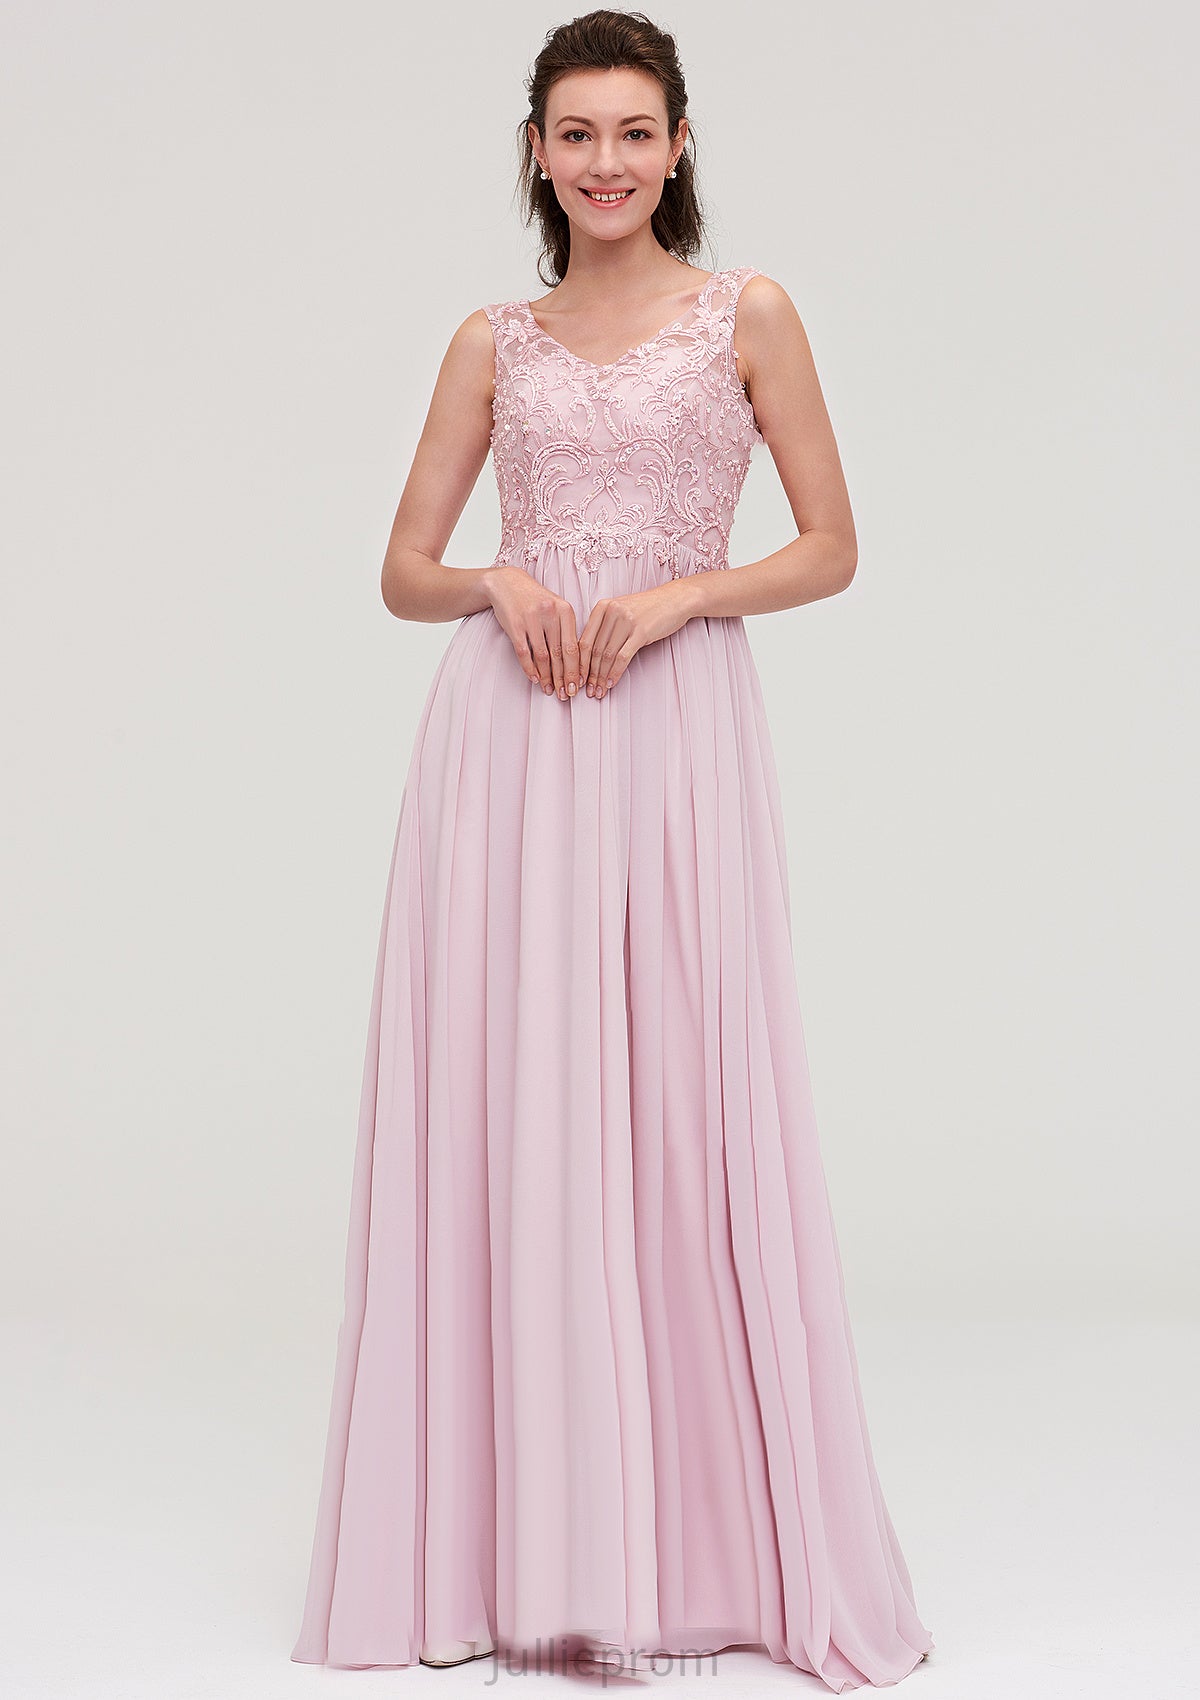 Sleeveless V Neck A-line/Princess Chiffon Long/Floor-Length Bridesmaid Dresseses With Beading Appliqued Meadow DQP0025410